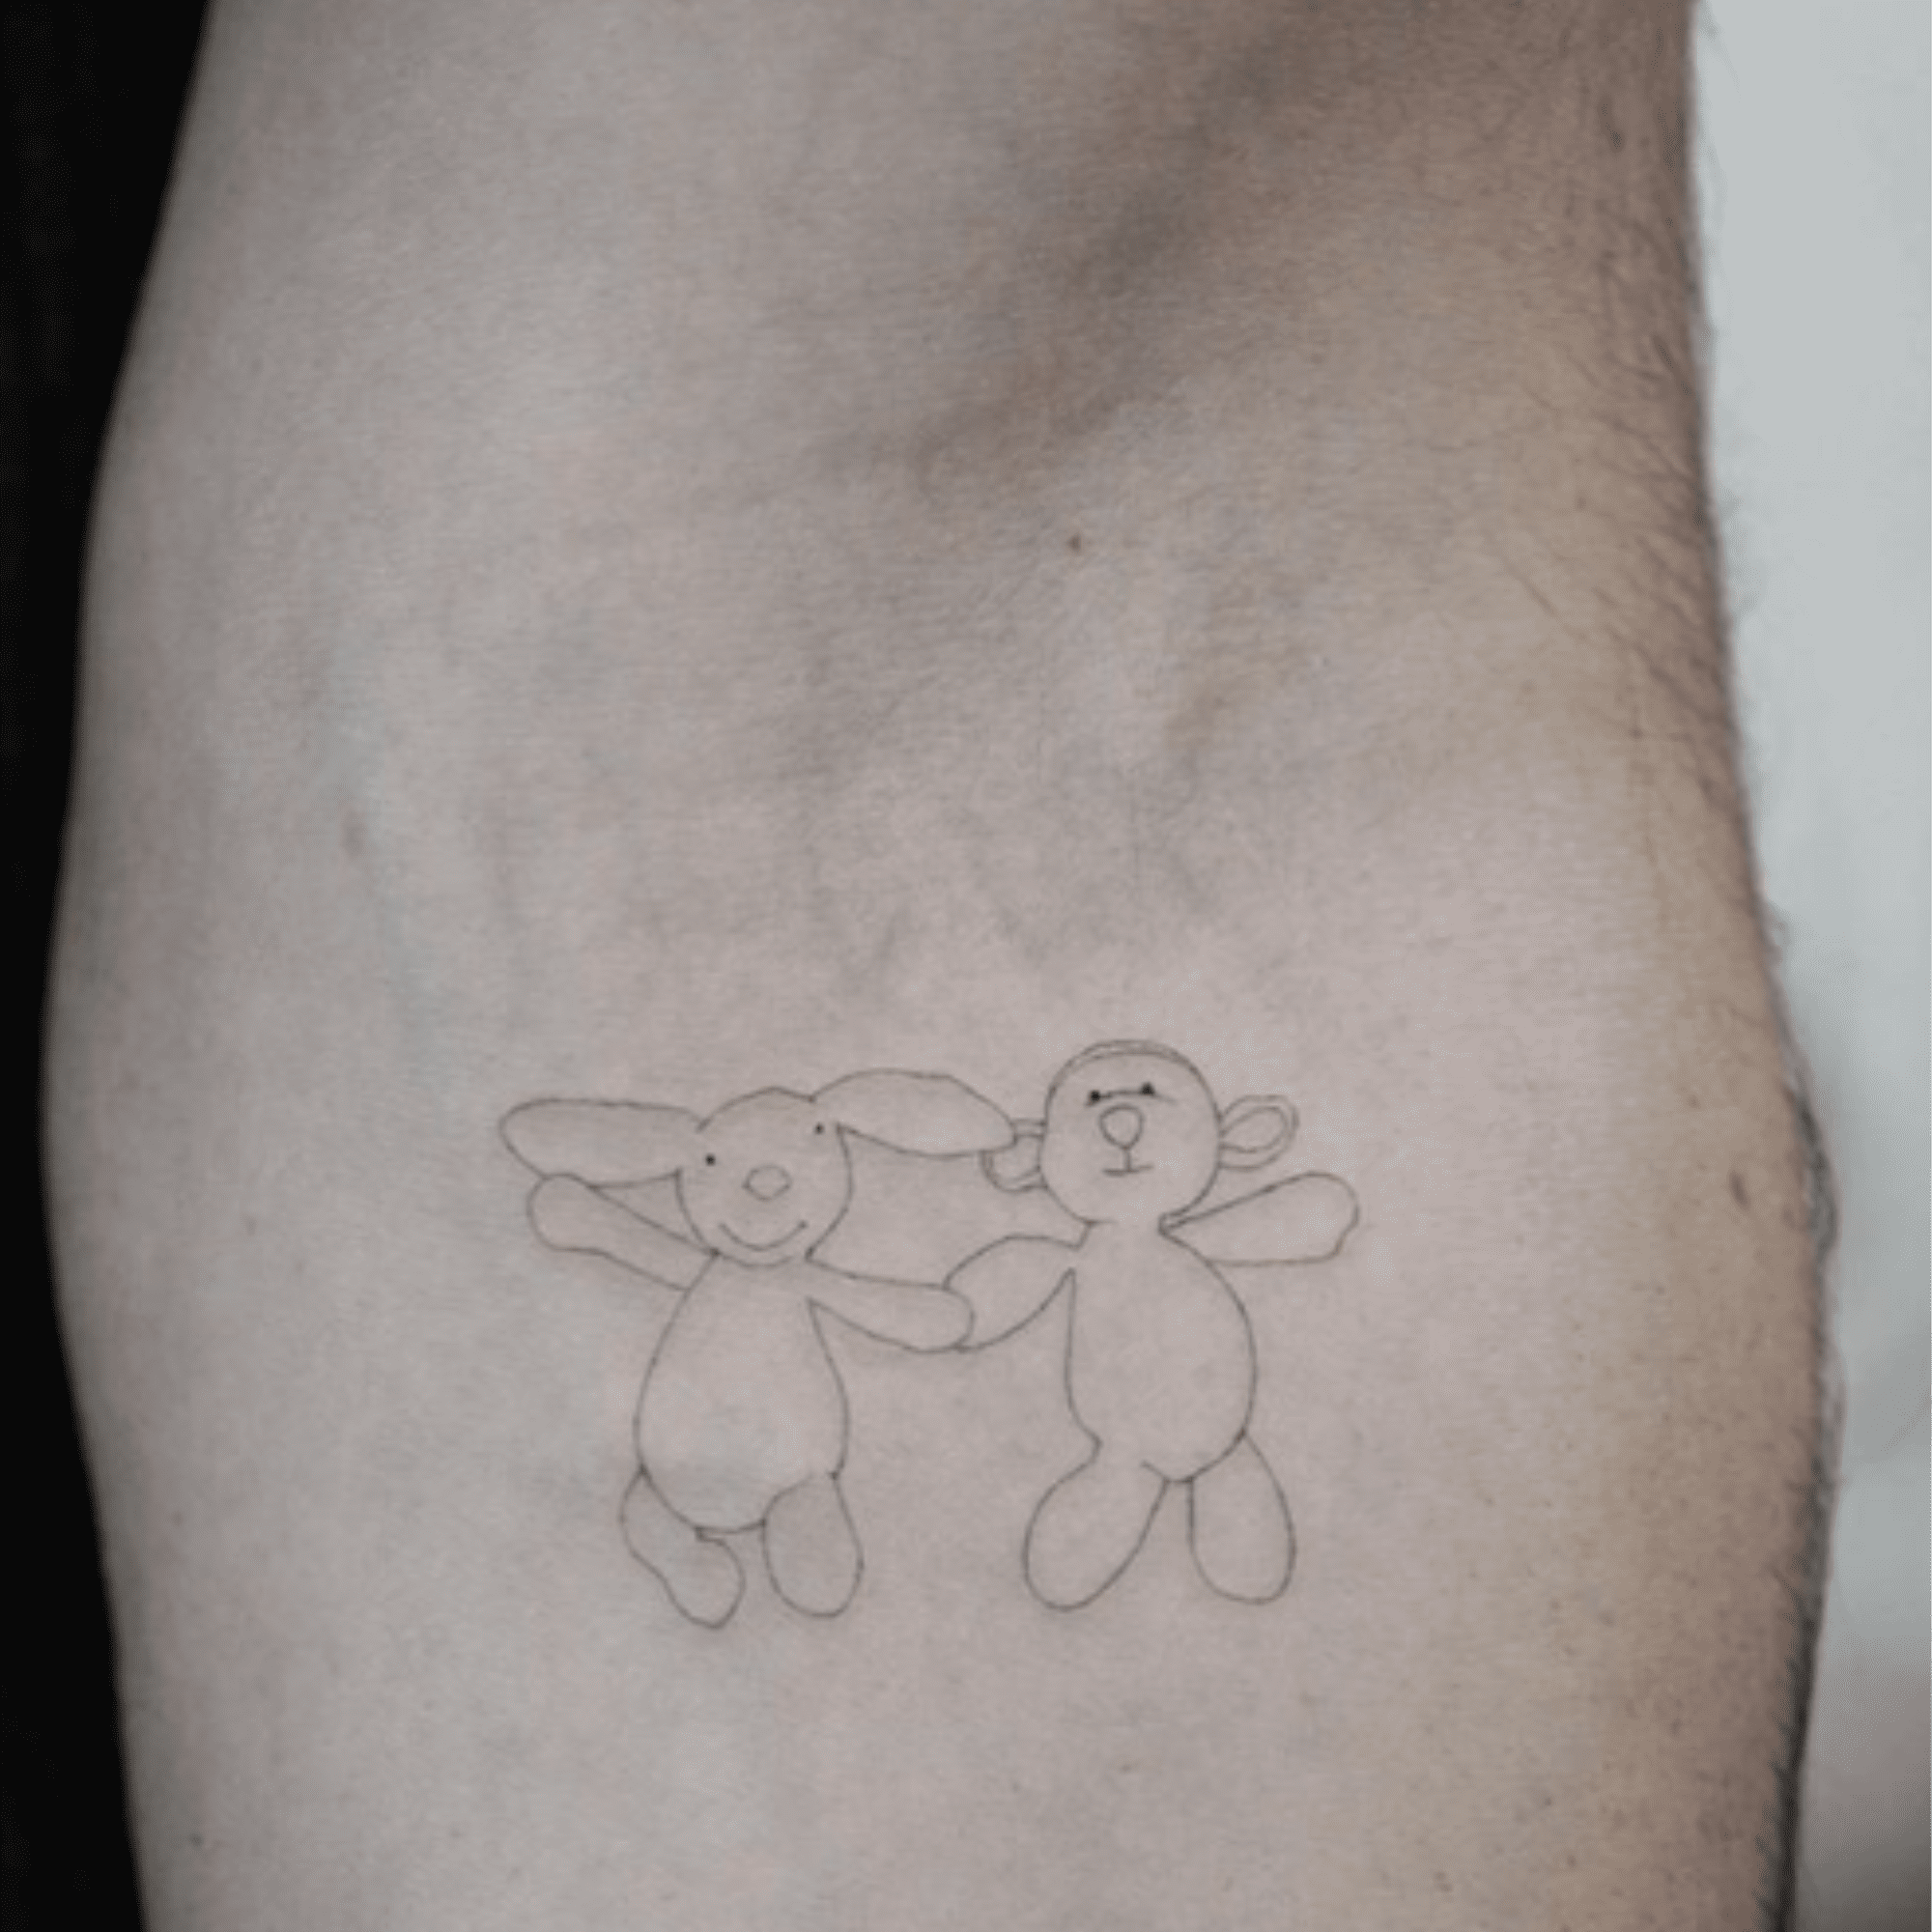 Tattoo Hobbes as a stuffed animal  rcalvinandhobbes